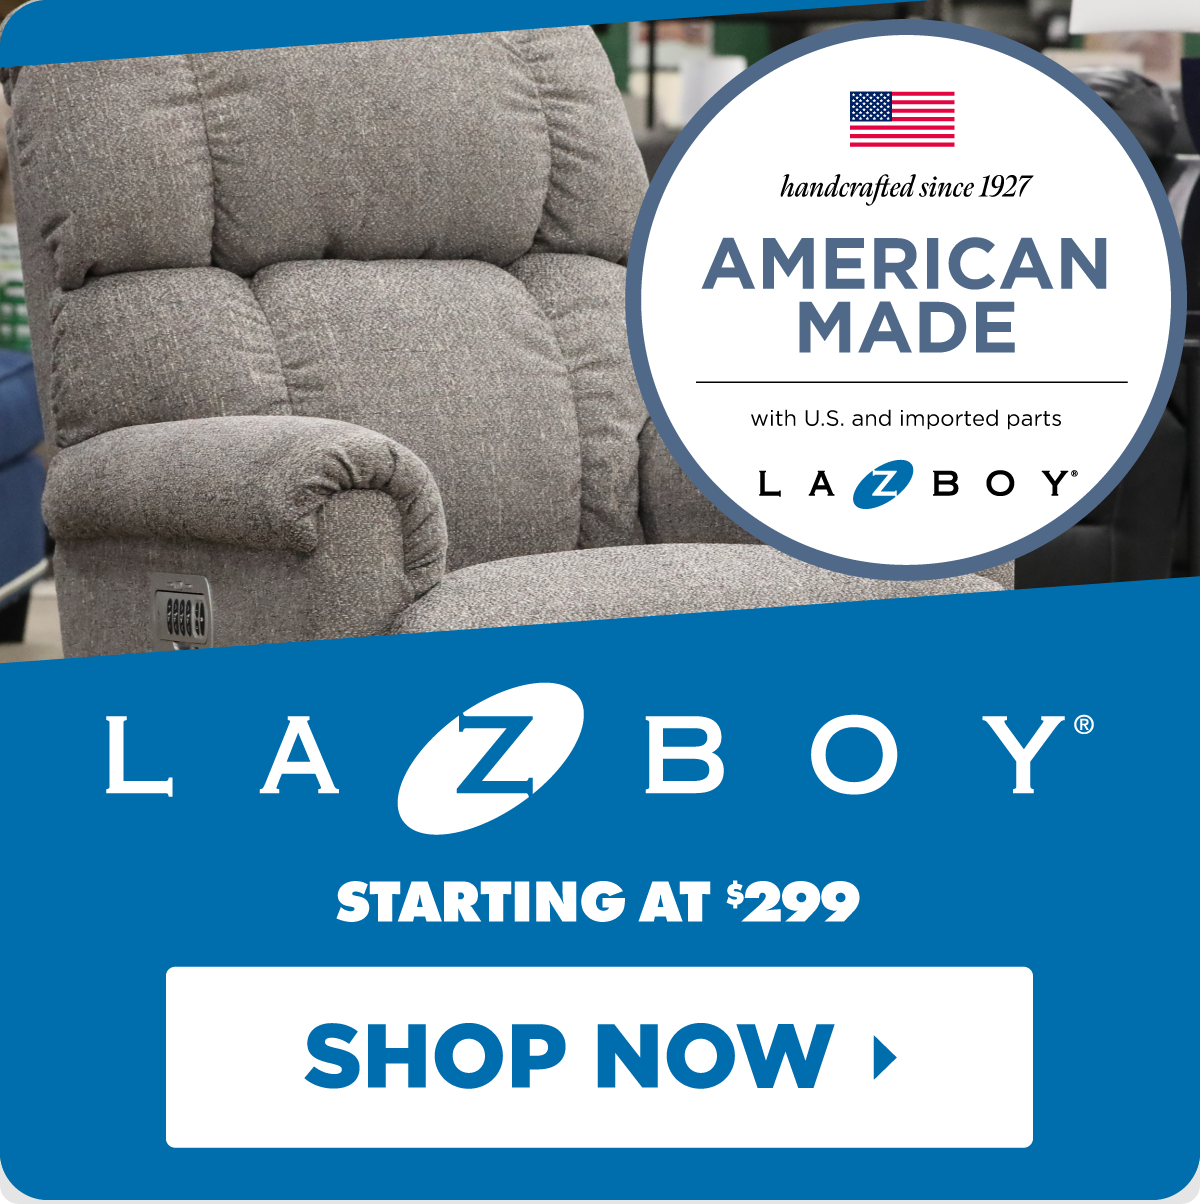 La-Z-Boy furniture in Wichita